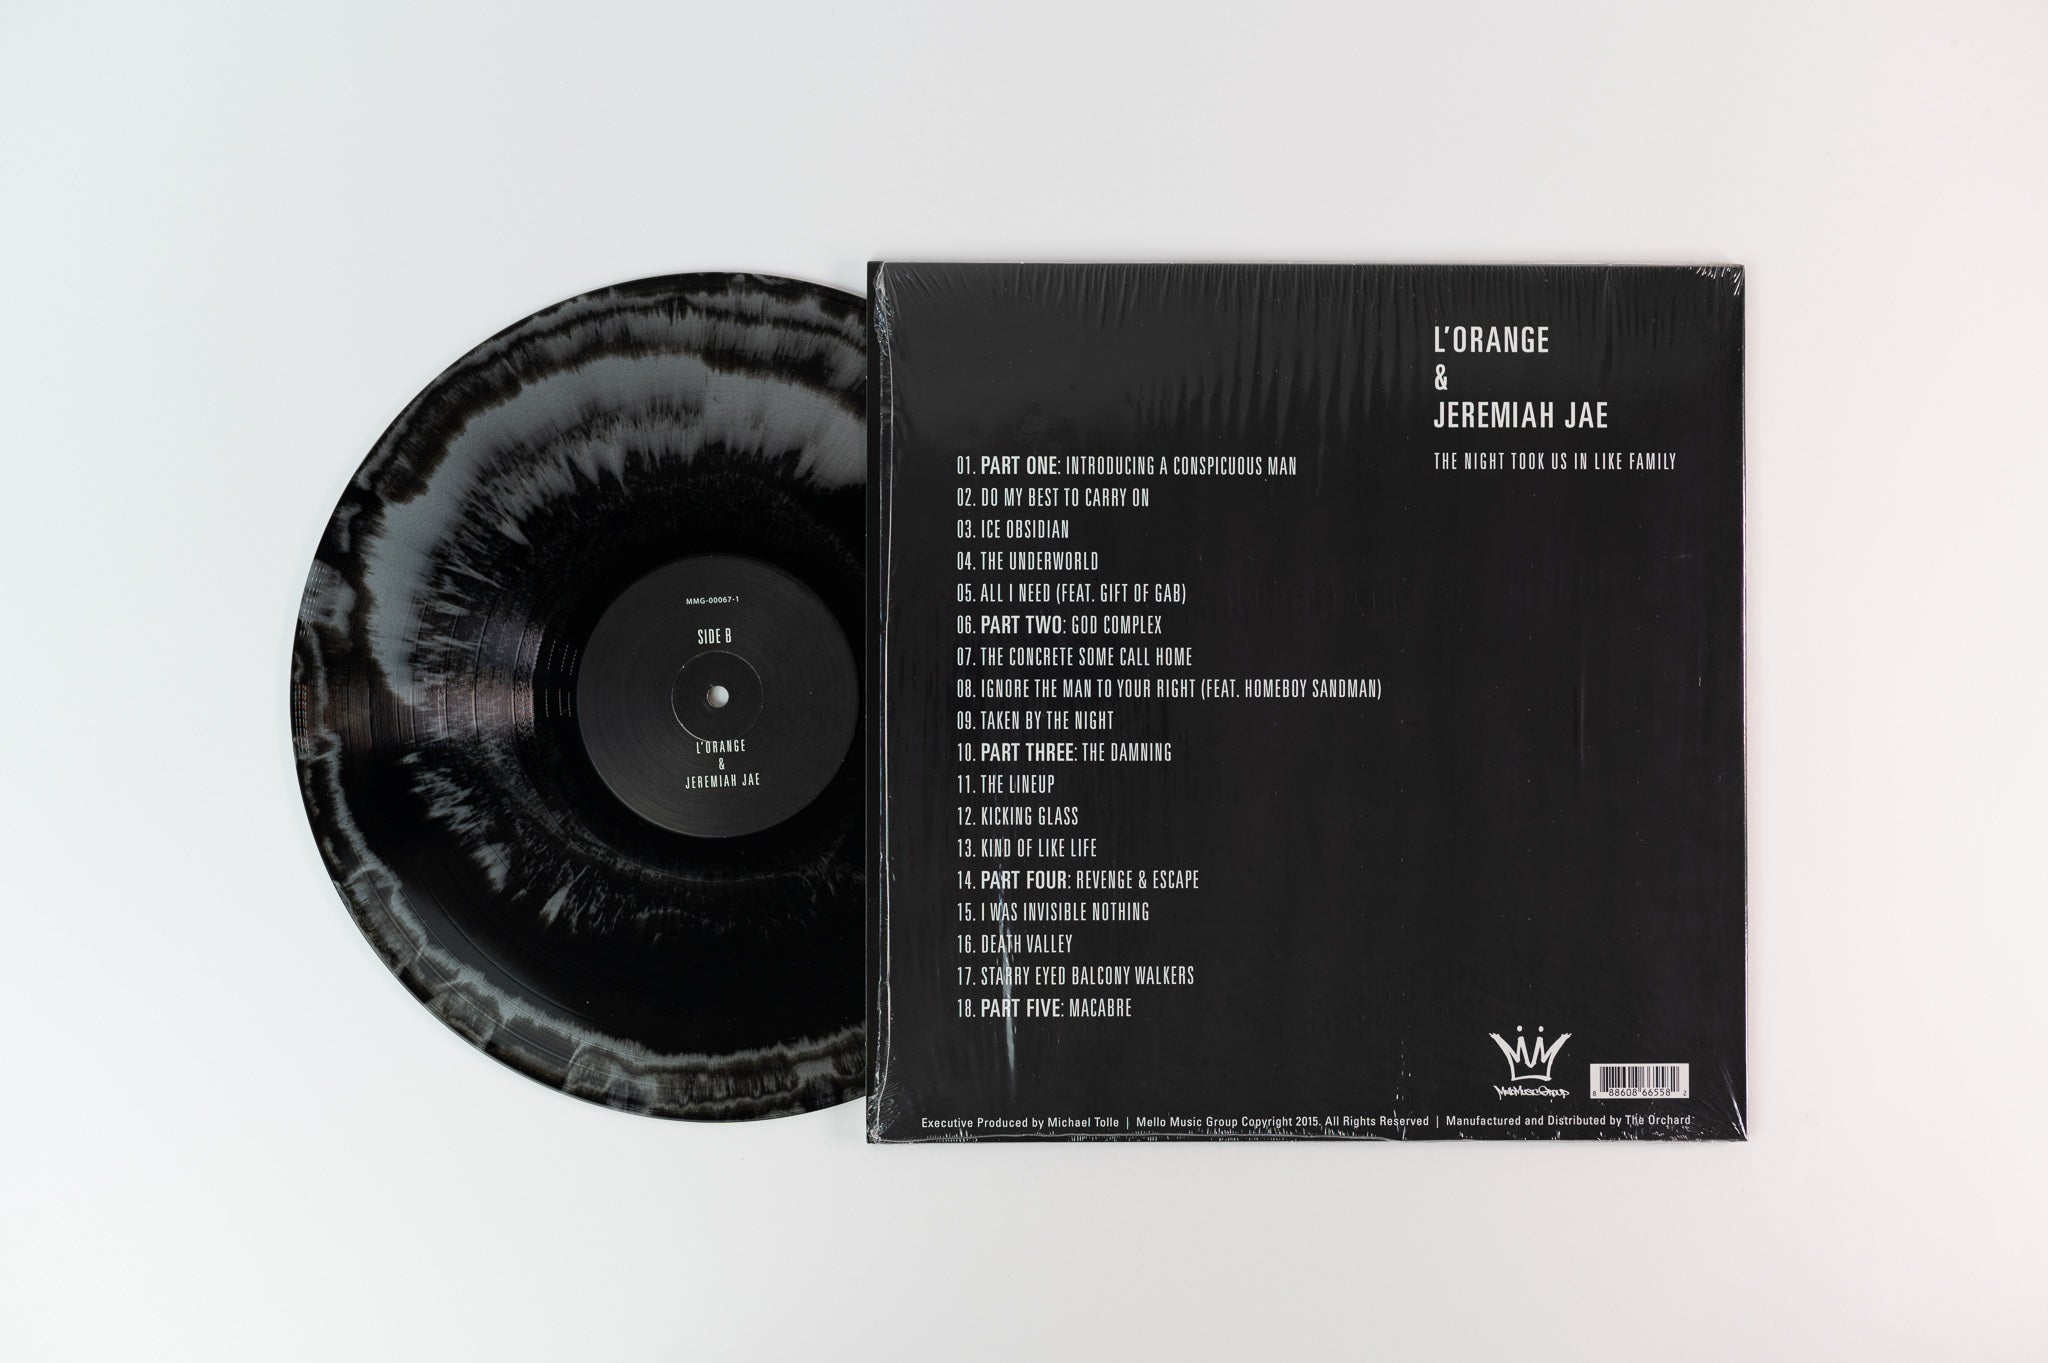 L'Orange & Jeremiah Jae - The Night Took Us In Like Family on Mello Music Silver and Black Vinyl Reissue